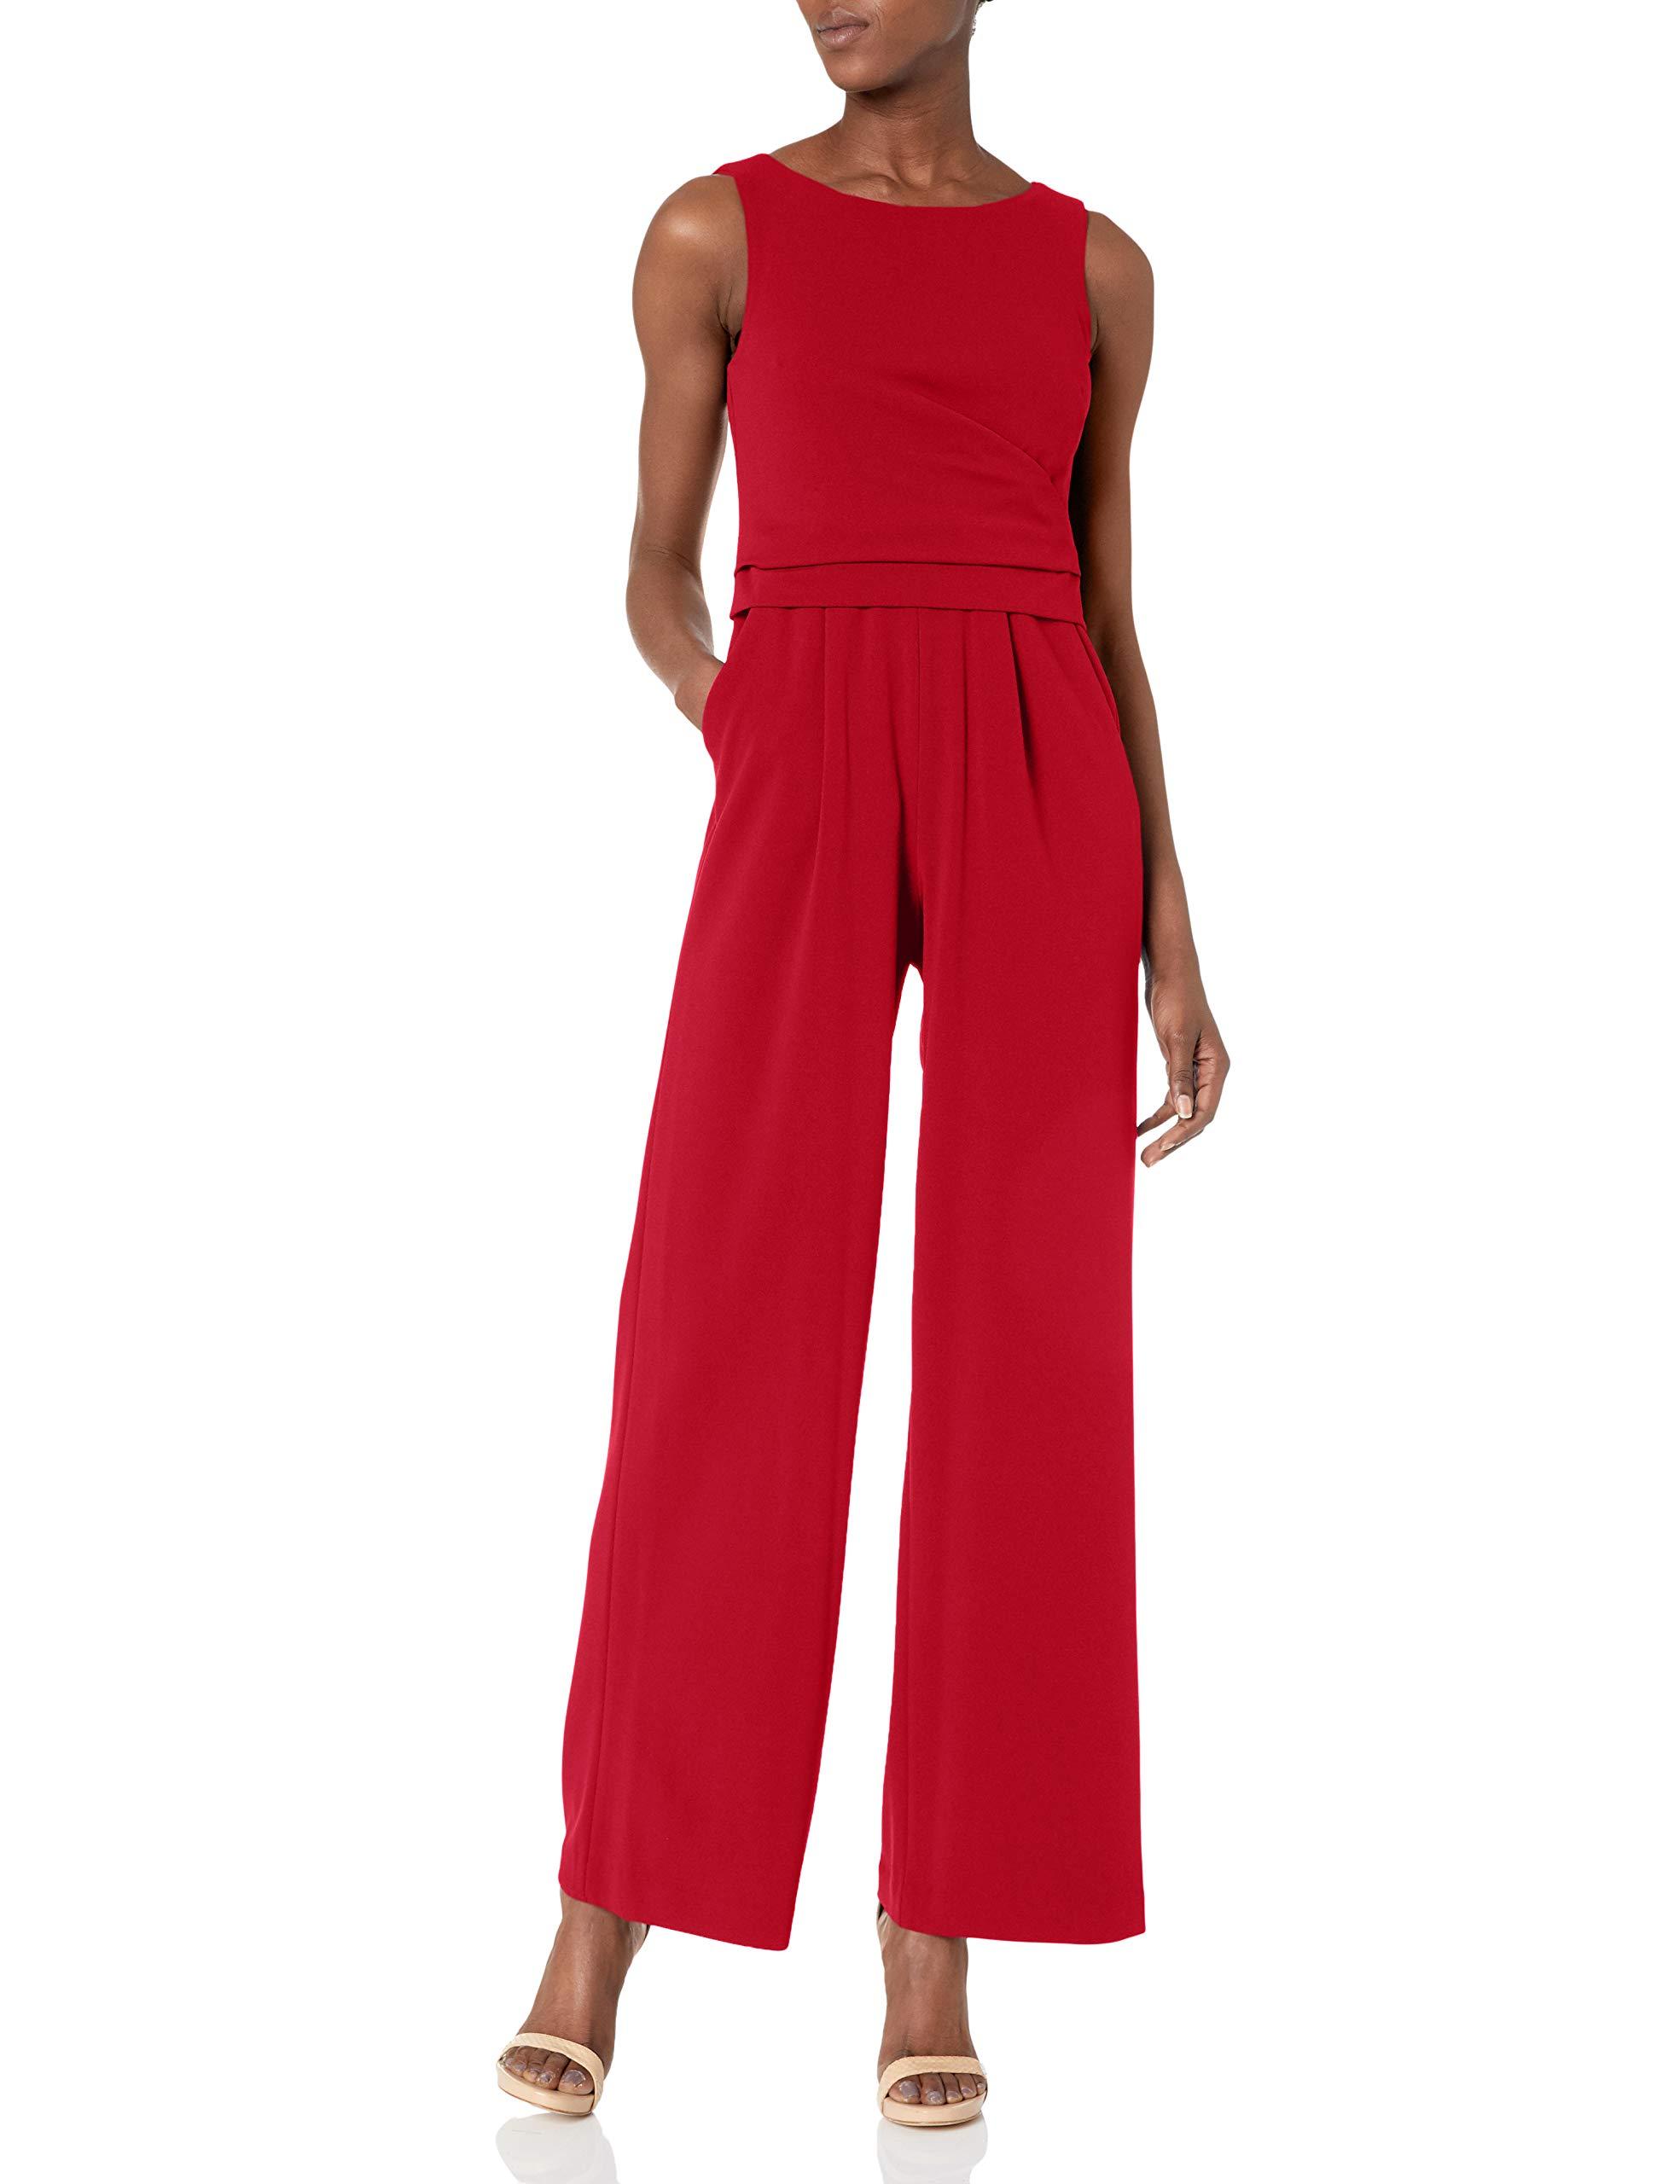 Calvin Klein Sleeveless Jumpsuit With Flat Pleat Waist Detail in Red - Lyst